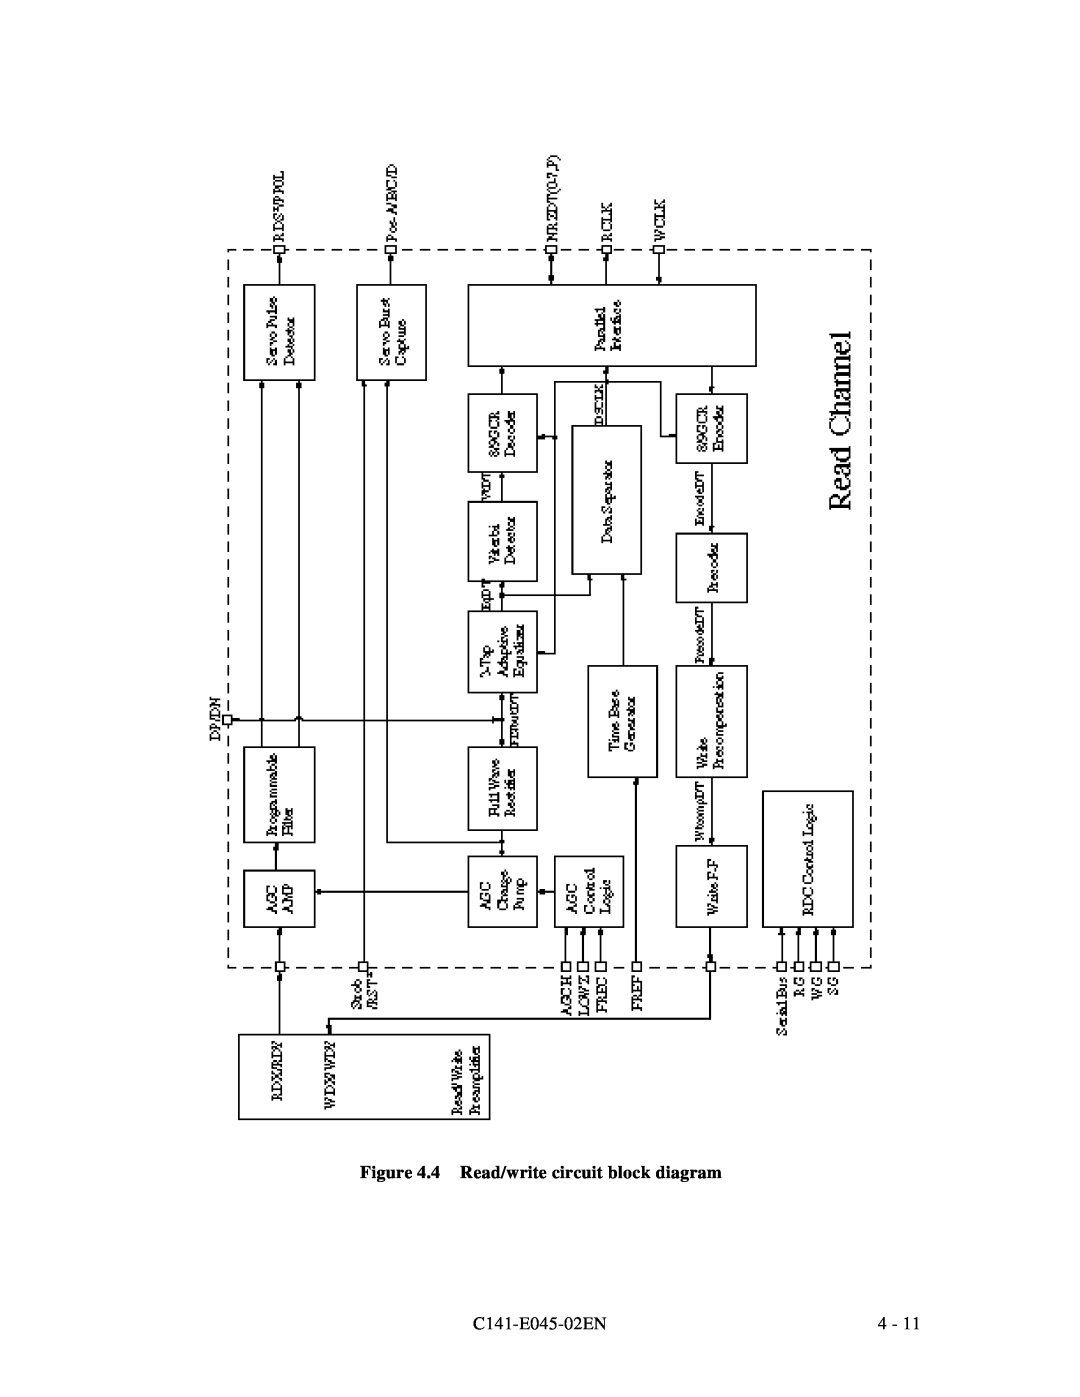 Fujitsu MPB3043AT, MPB3054AT, MPB3032AT, MPB3052AT, MPB3021AT manual 4 Read/write circuit block diagram, C141-E045-02EN 